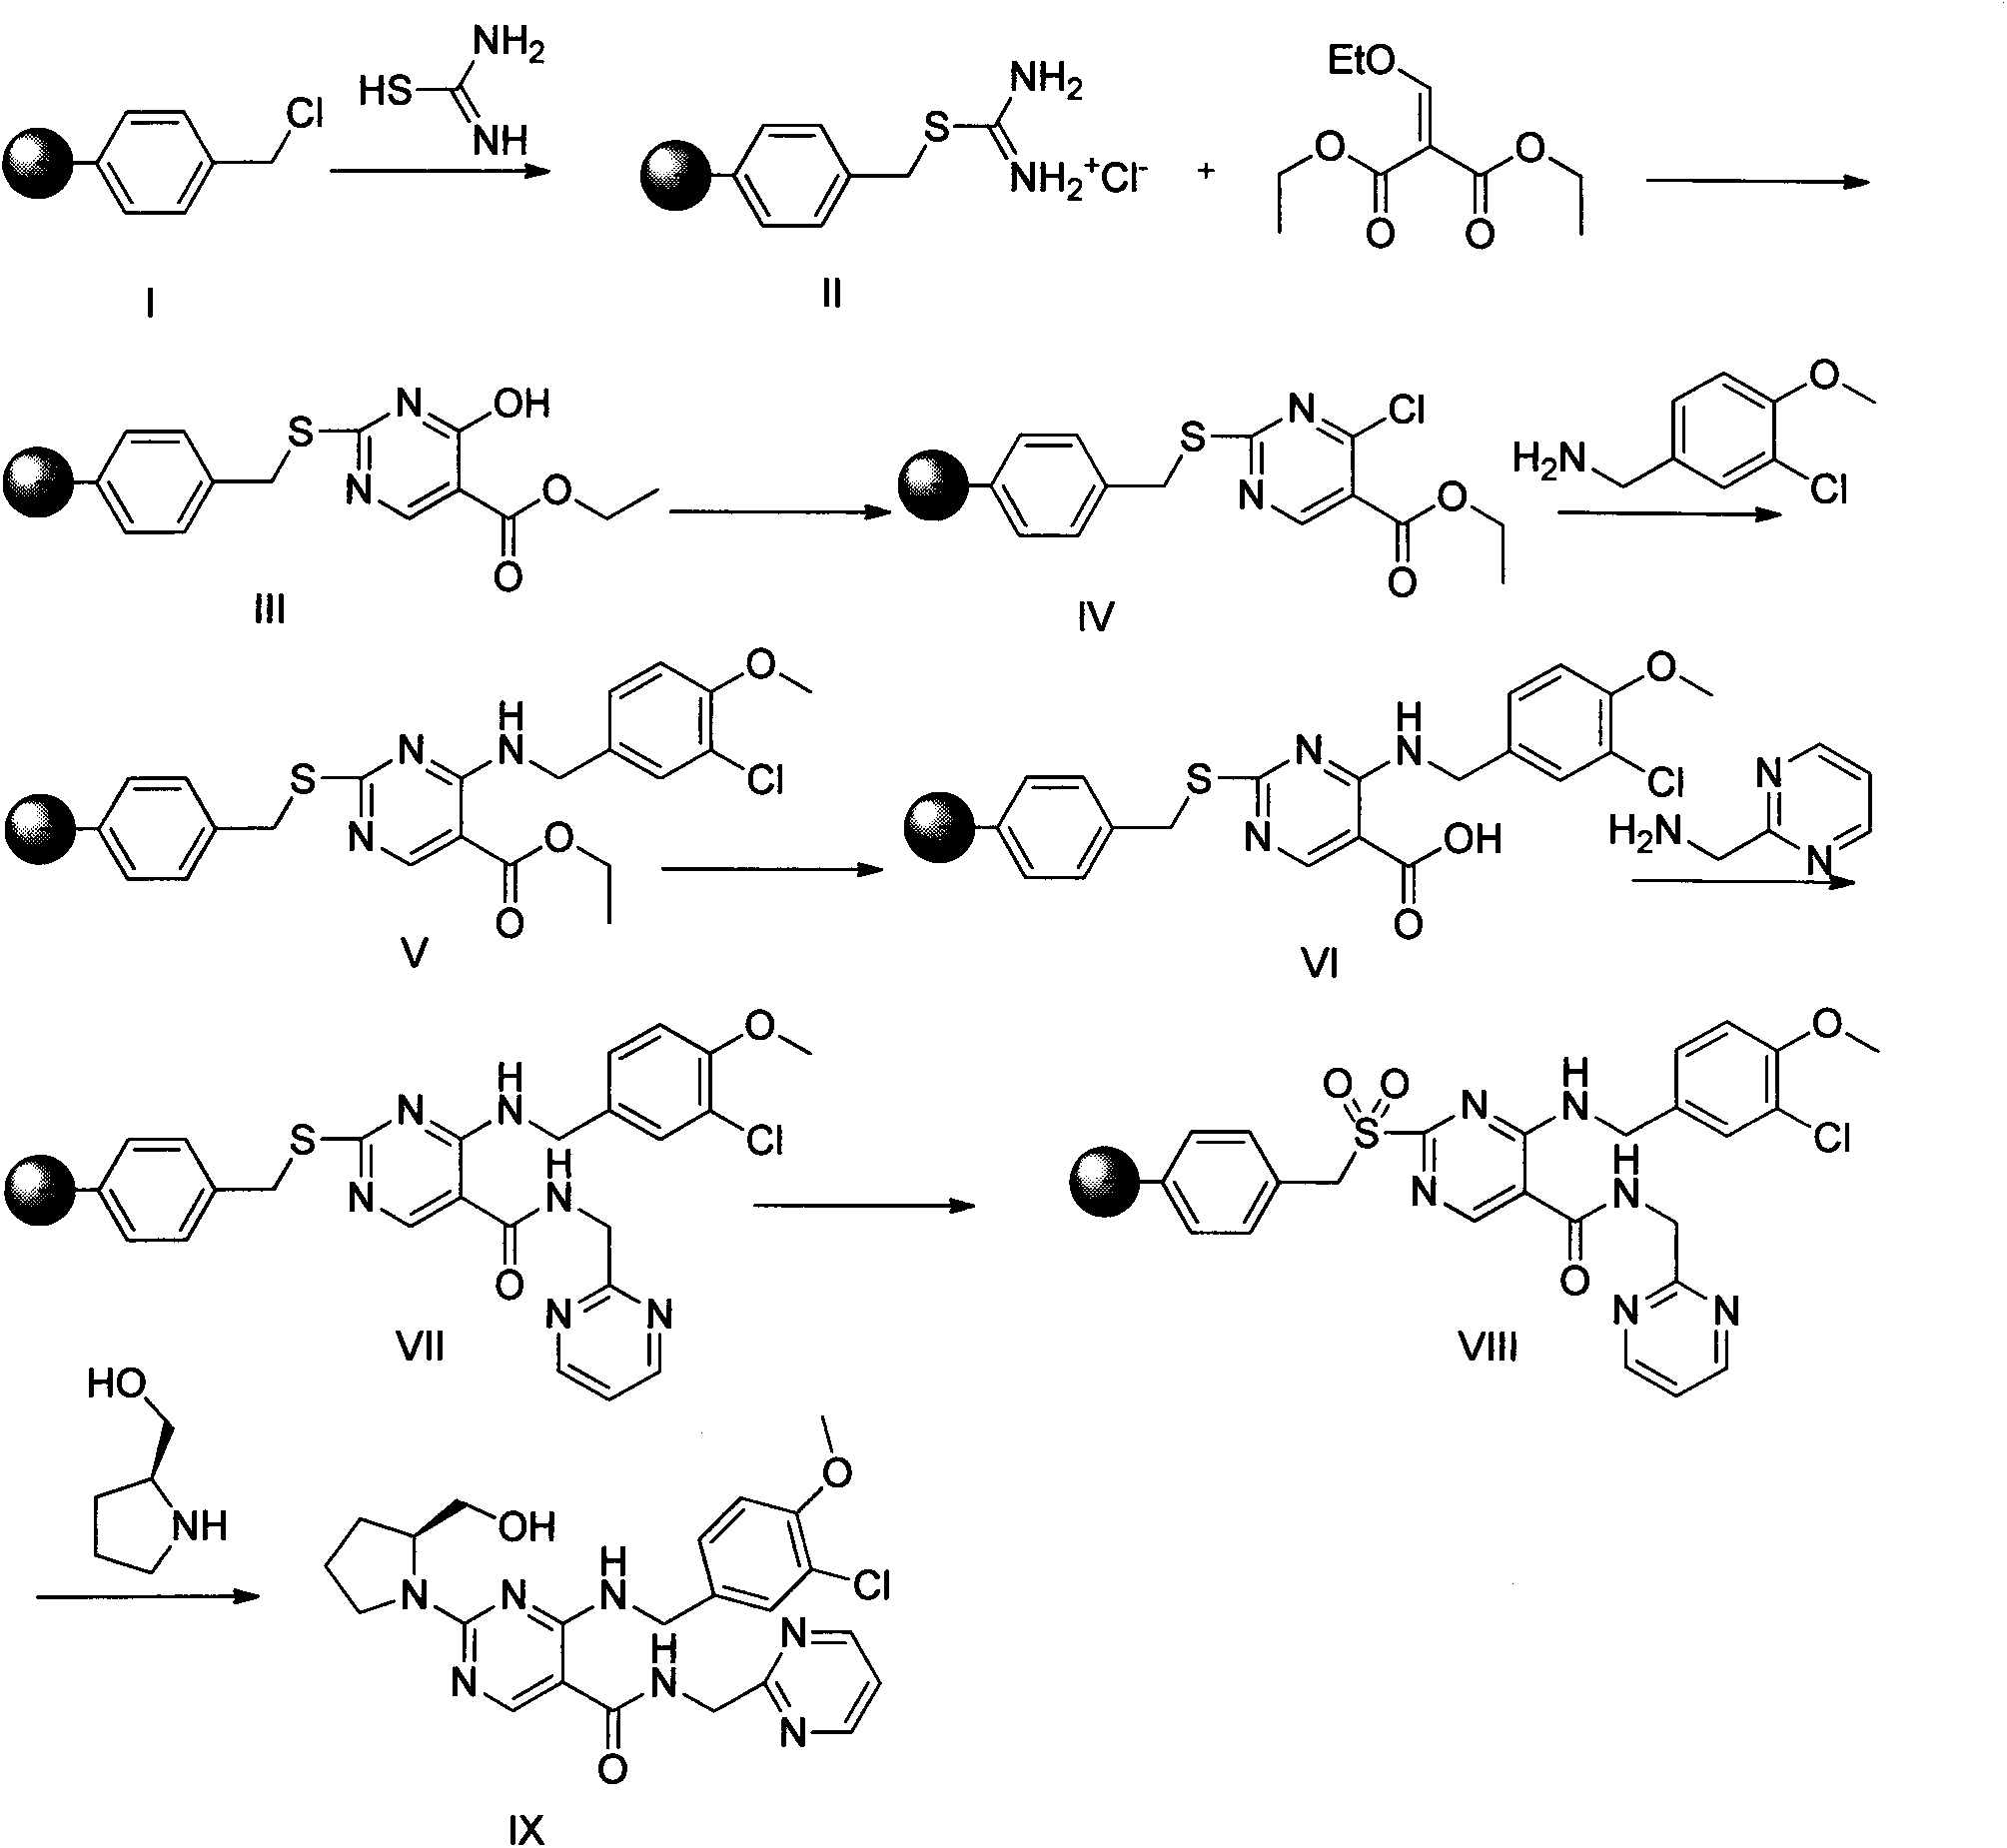 Solid-phase preparation method of avanafil